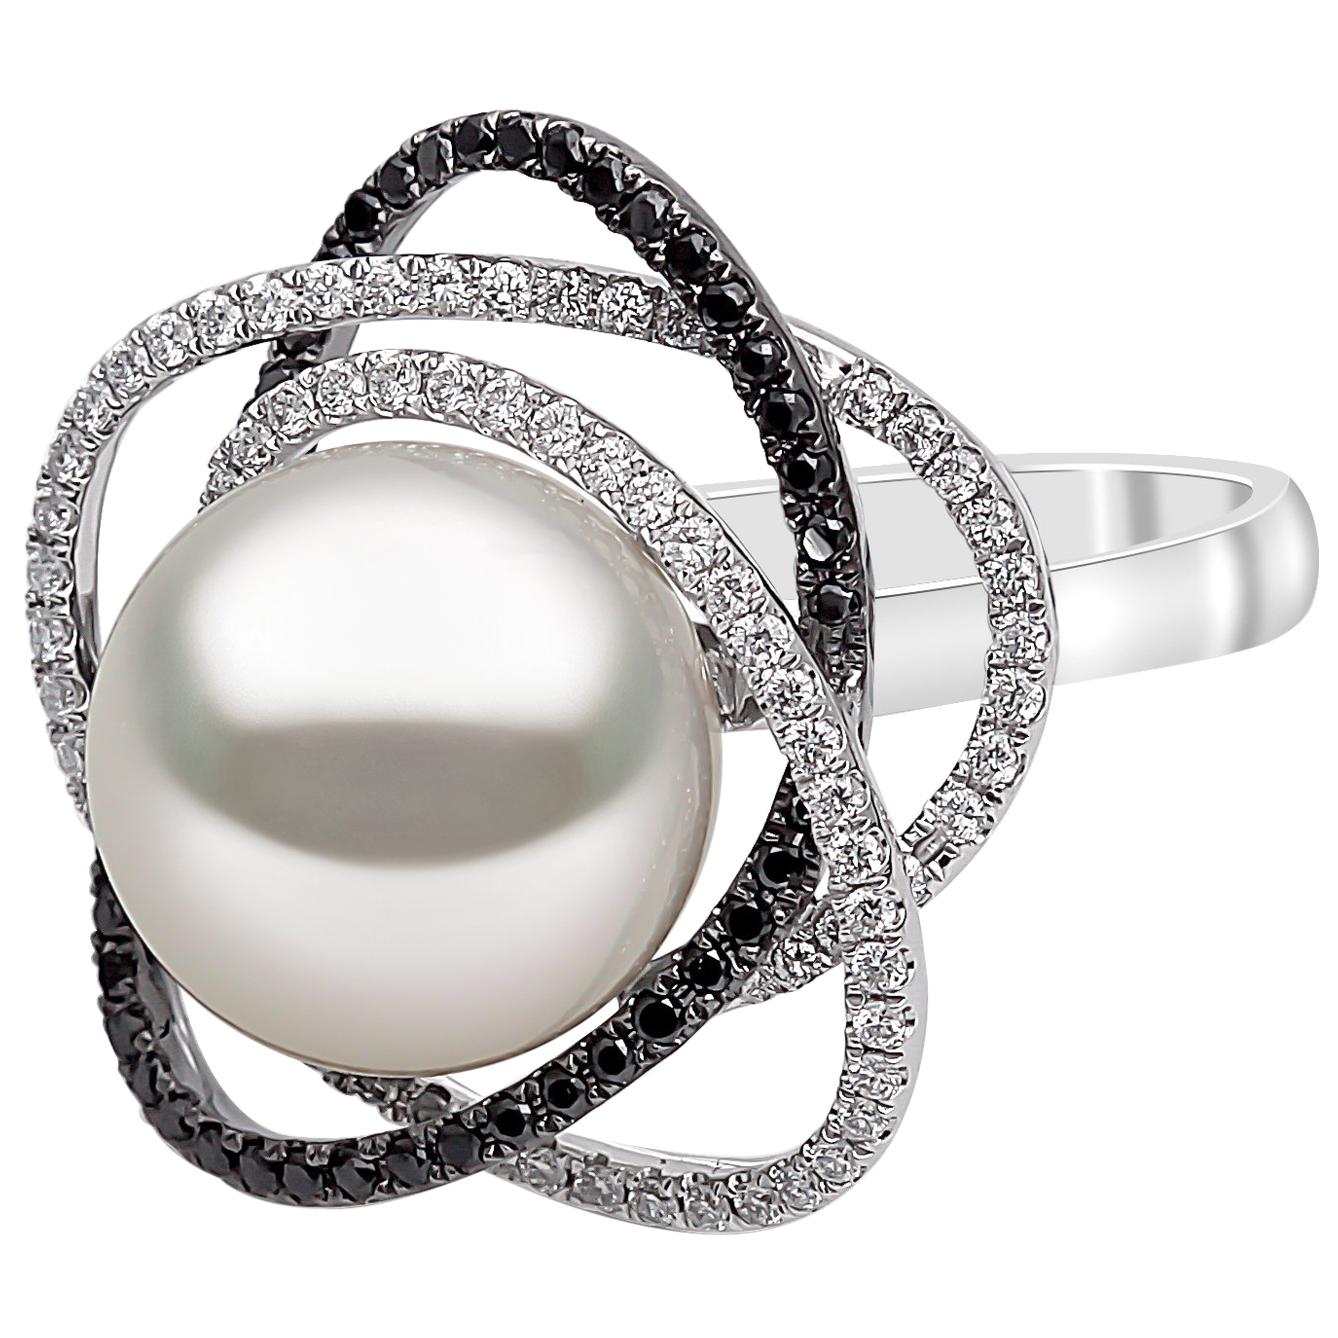 Yoko London South Sea Pearl Ring with Black and White Diamonds, in 18 Karat Gold